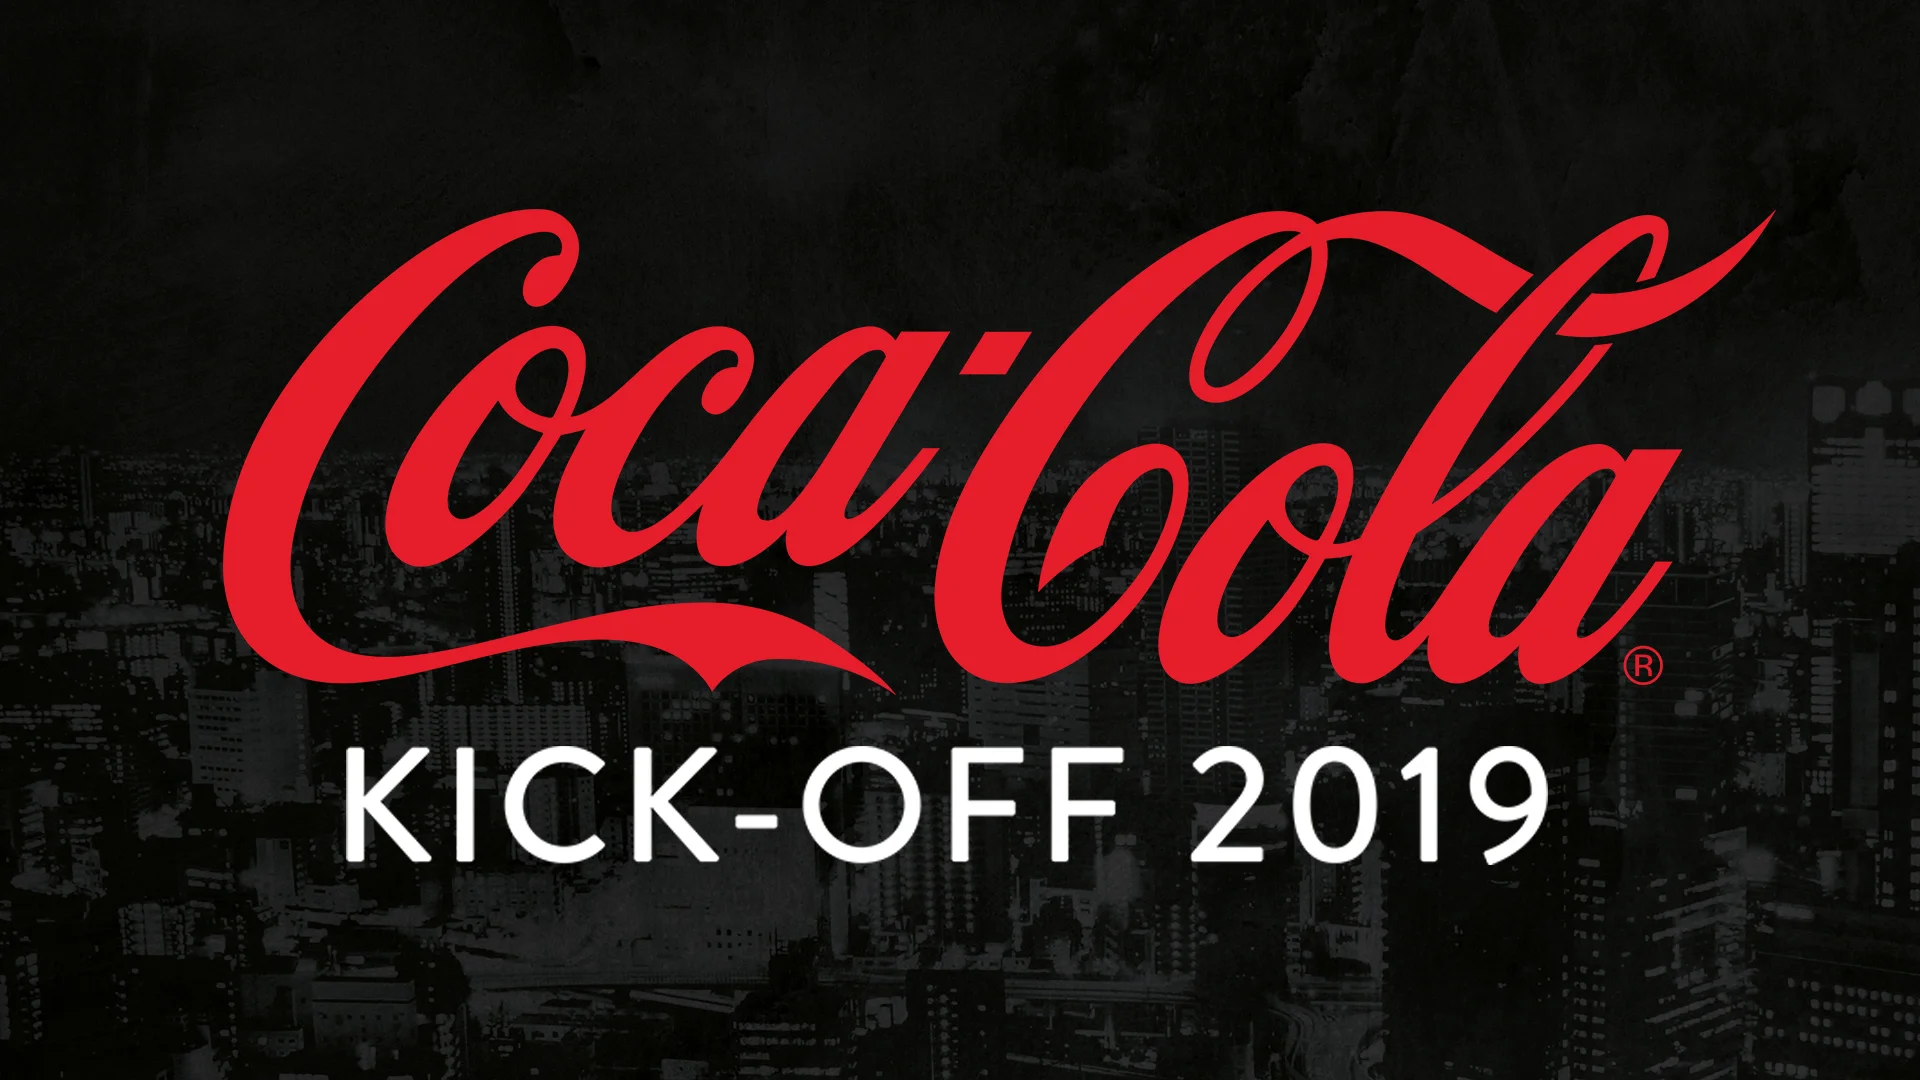 Coca-Cola HBC Kick-Off 2019 – for M2C